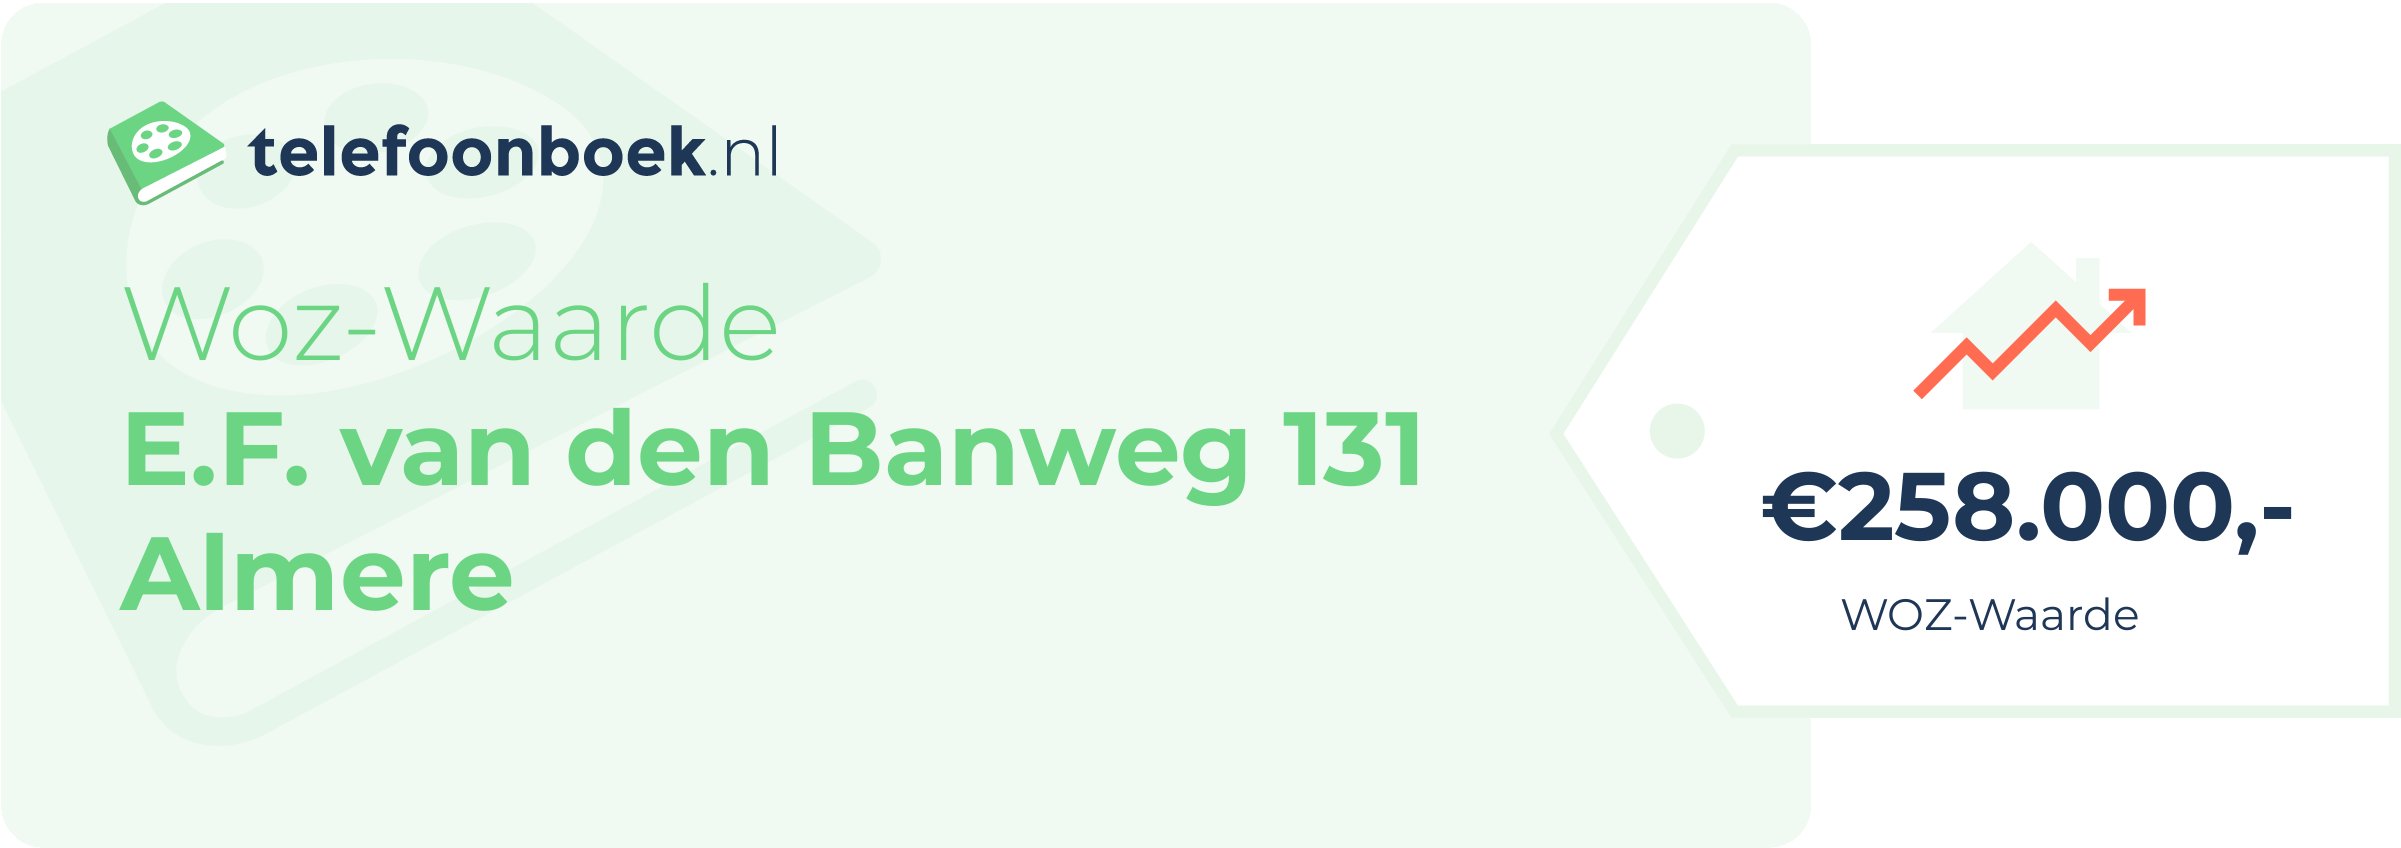 WOZ-waarde E.F. Van Den Banweg 131 Almere